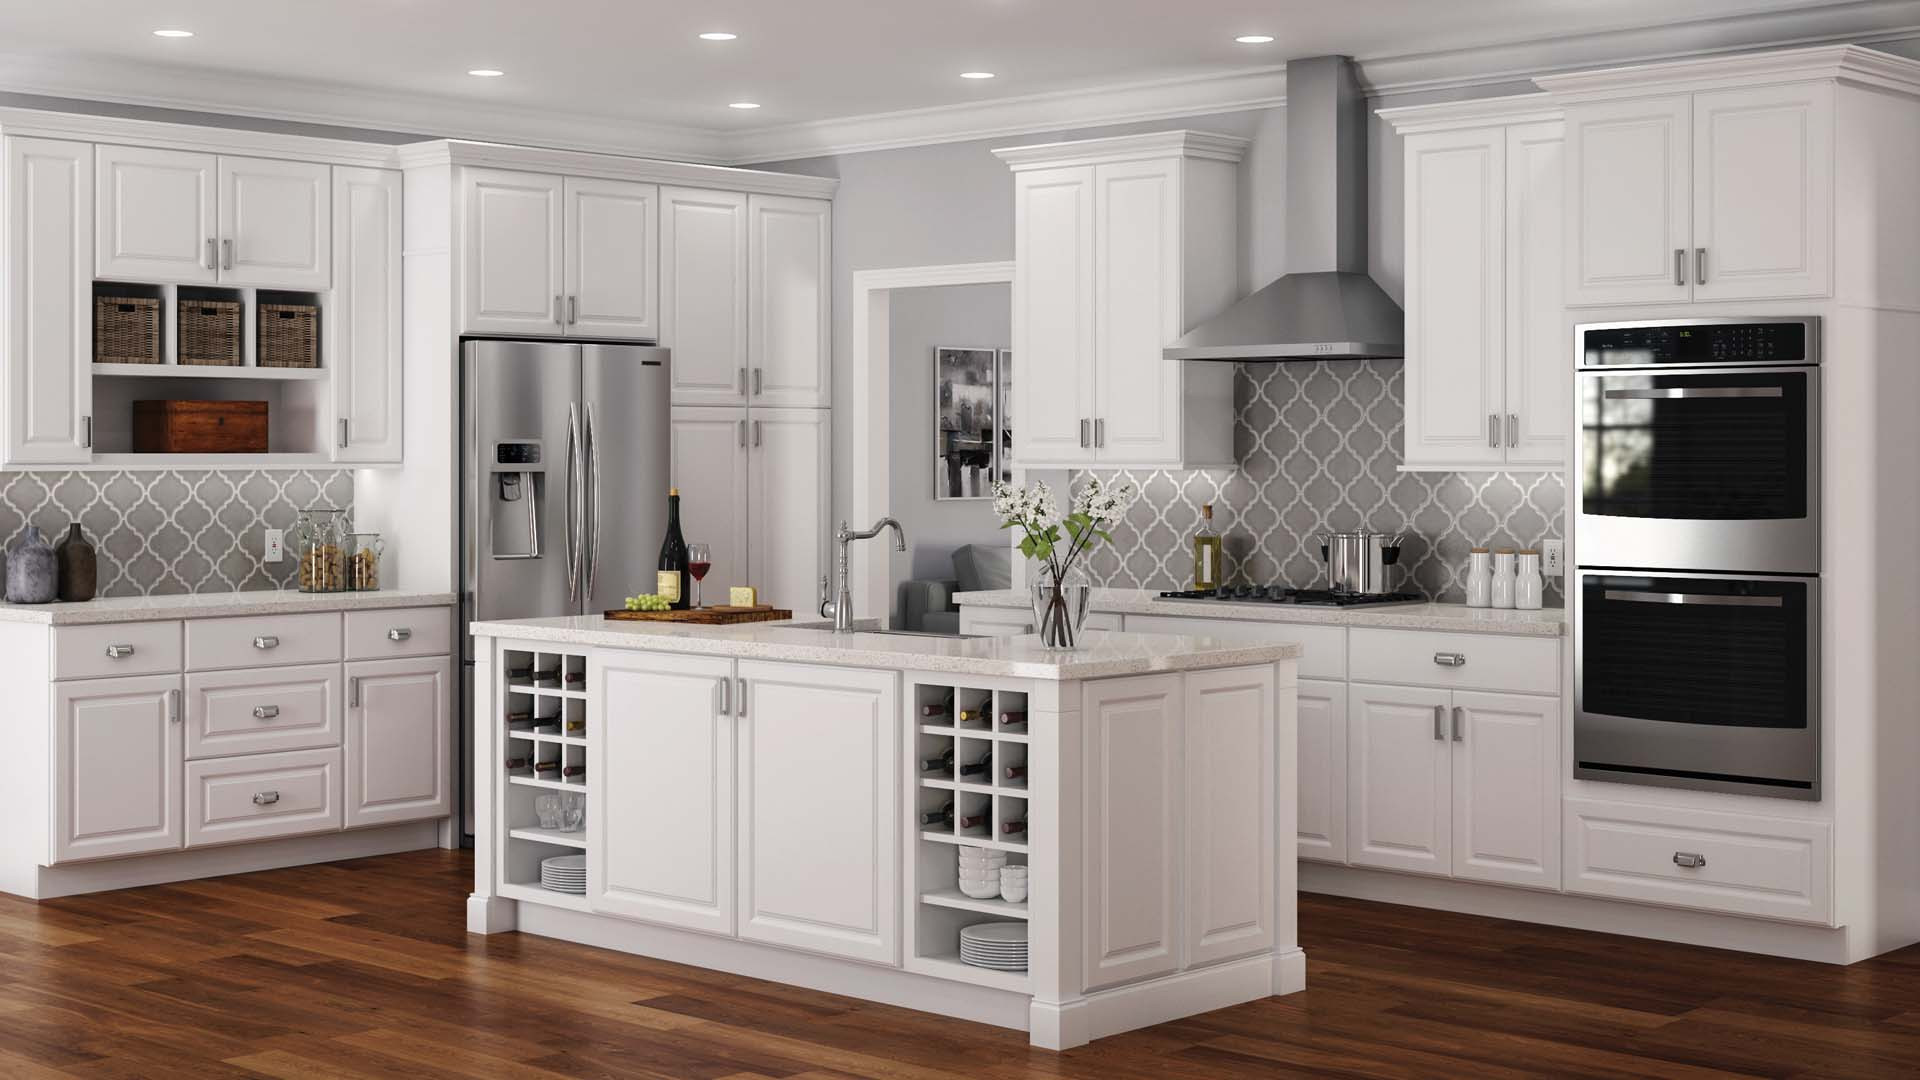 Home Depot Kitchen Storage
 Hampton Base Cabinets in White – Kitchen – The Home Depot